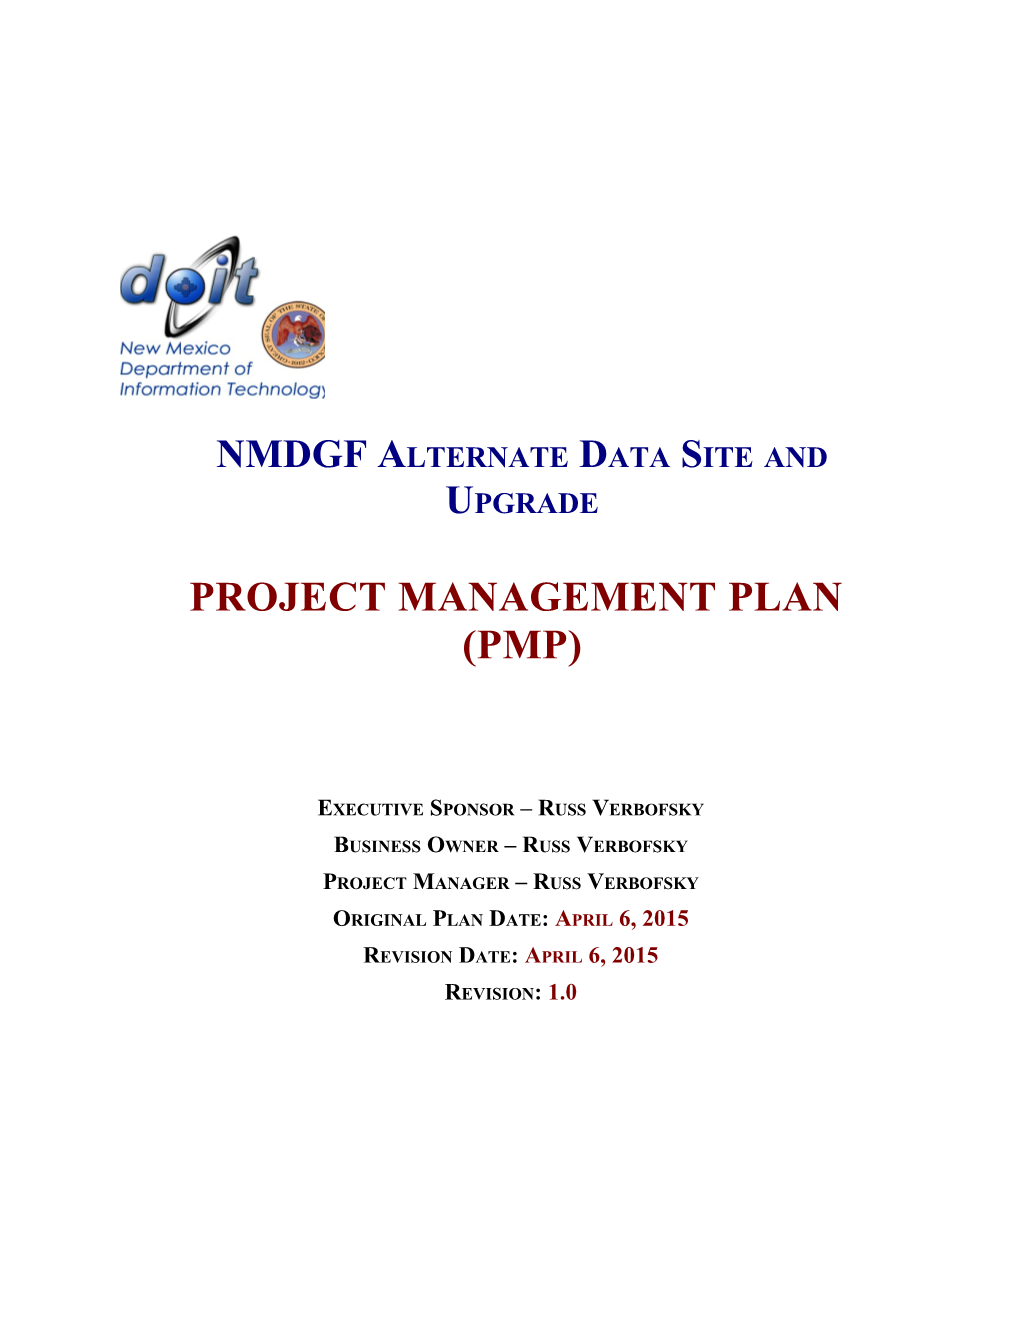 NMDGF Alternate Data Site and Upgrade